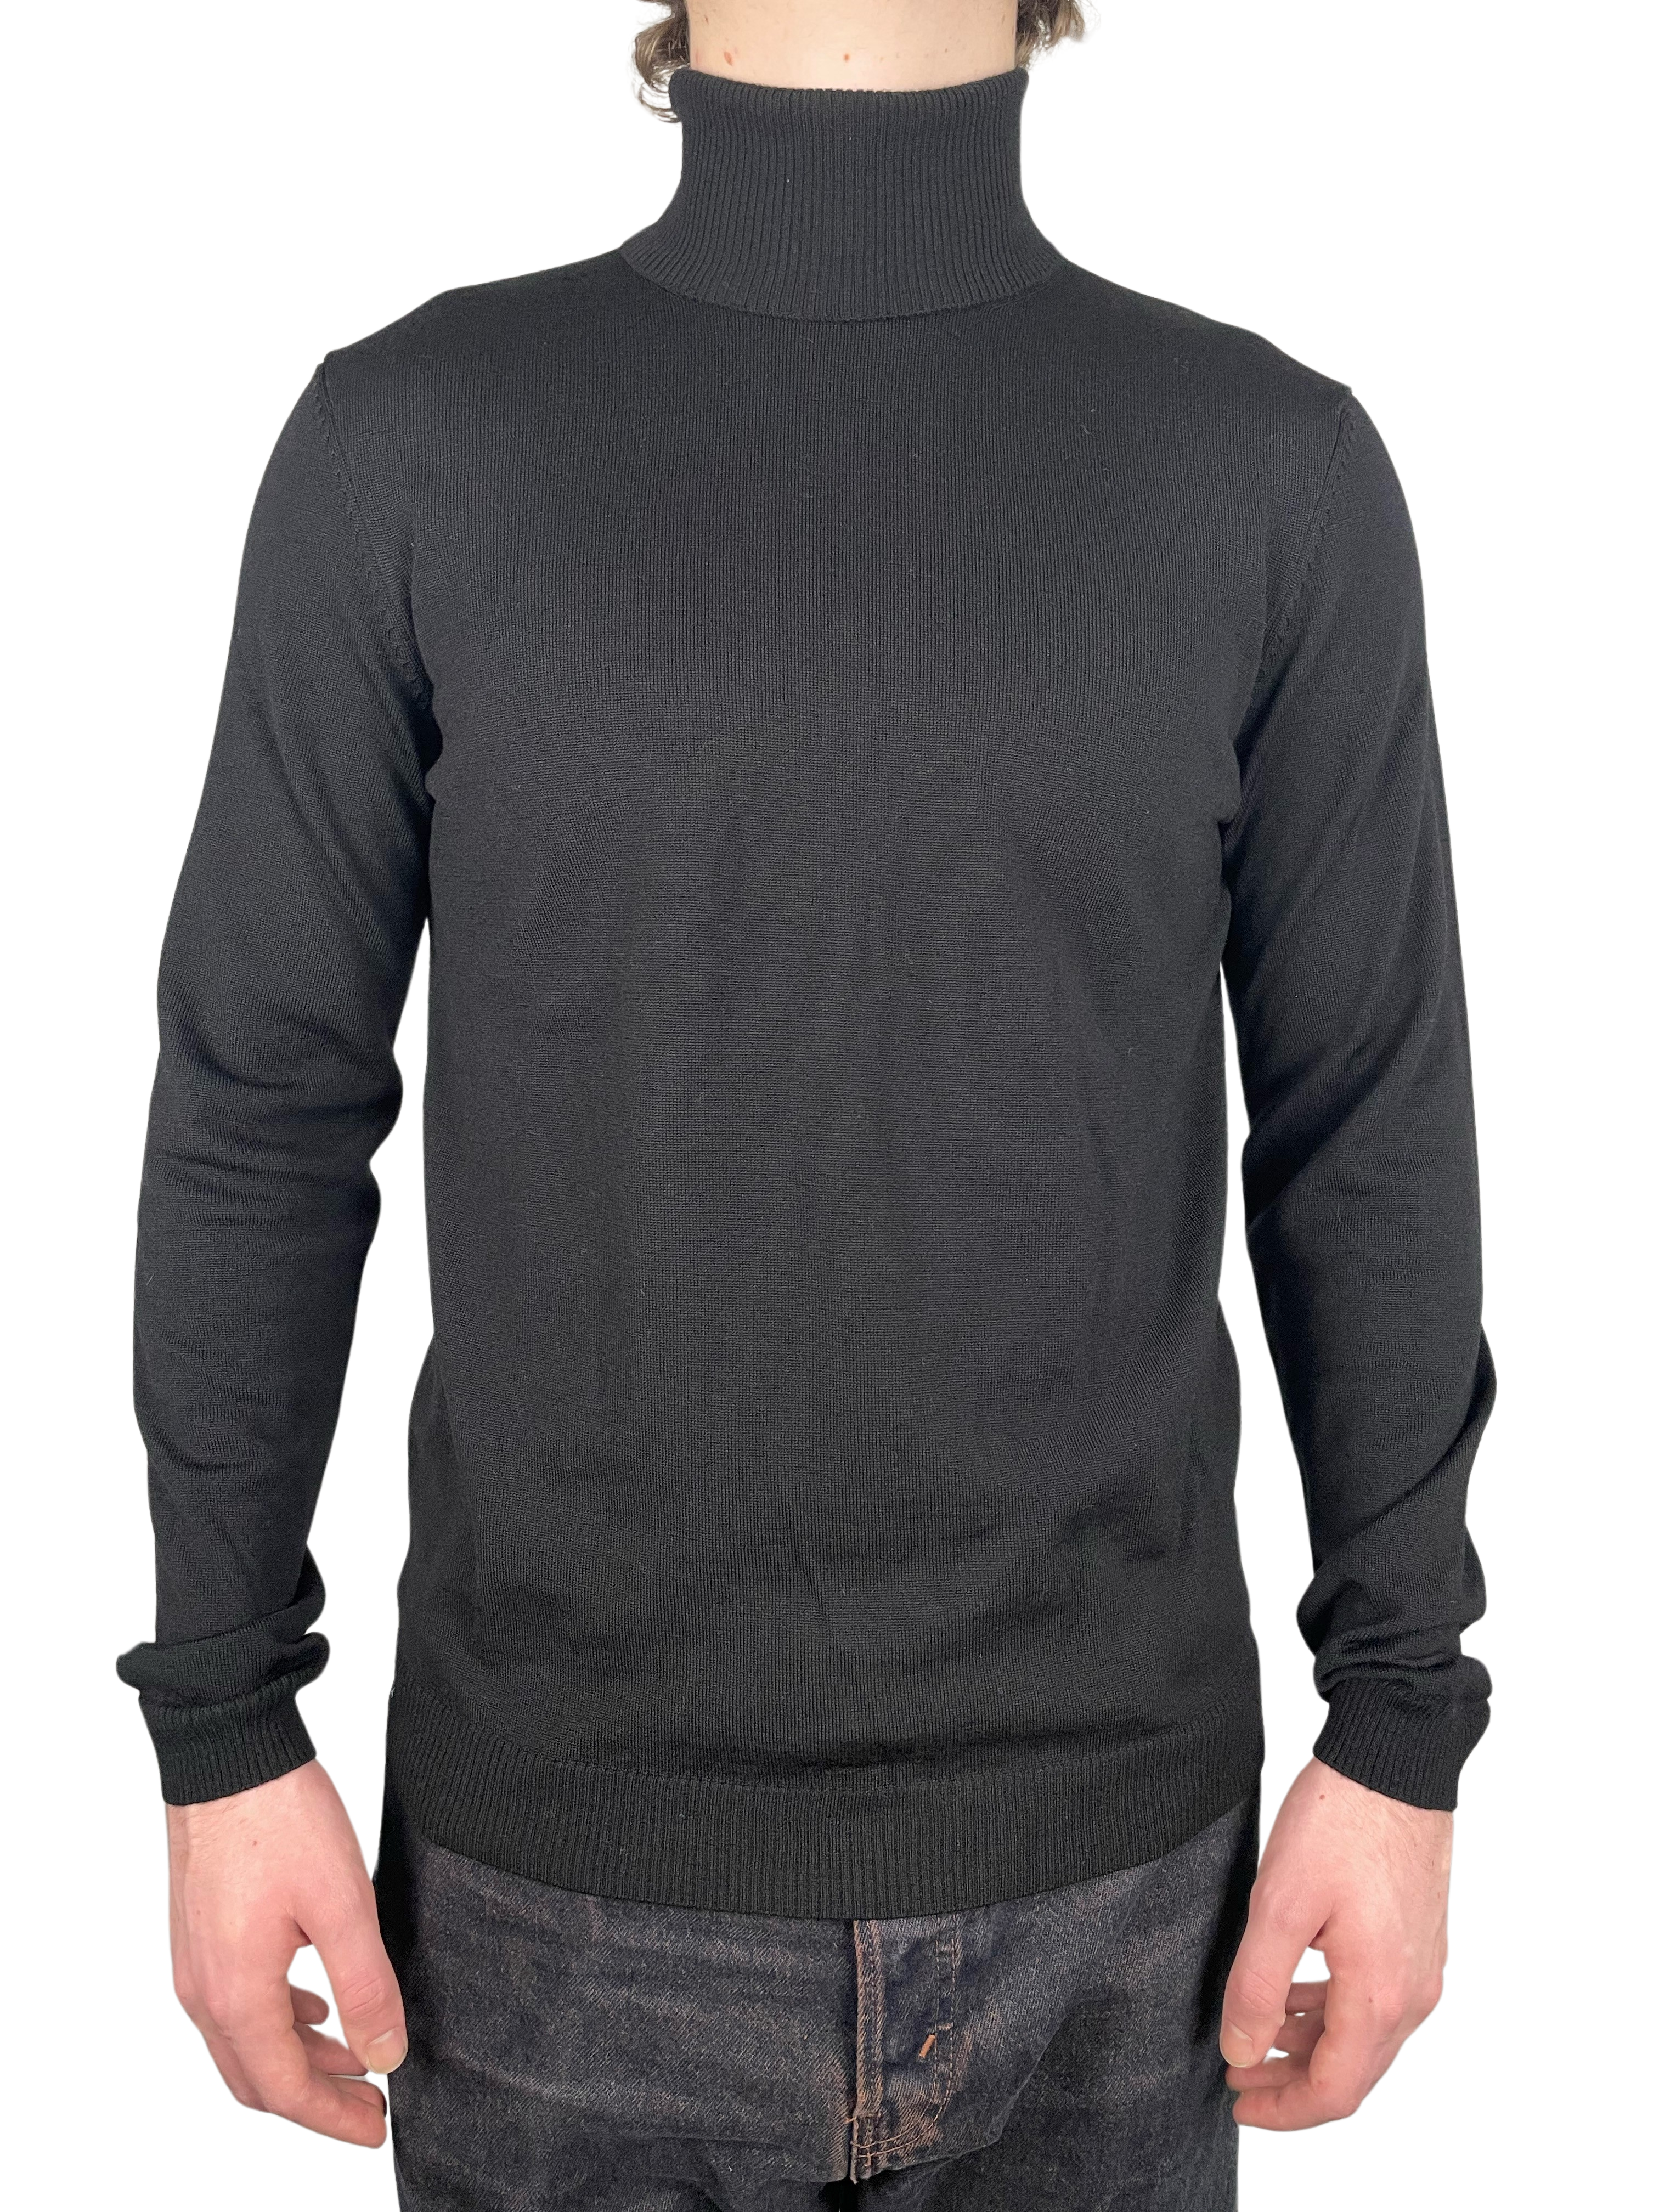 classic-turtleneck-sweater.jpg